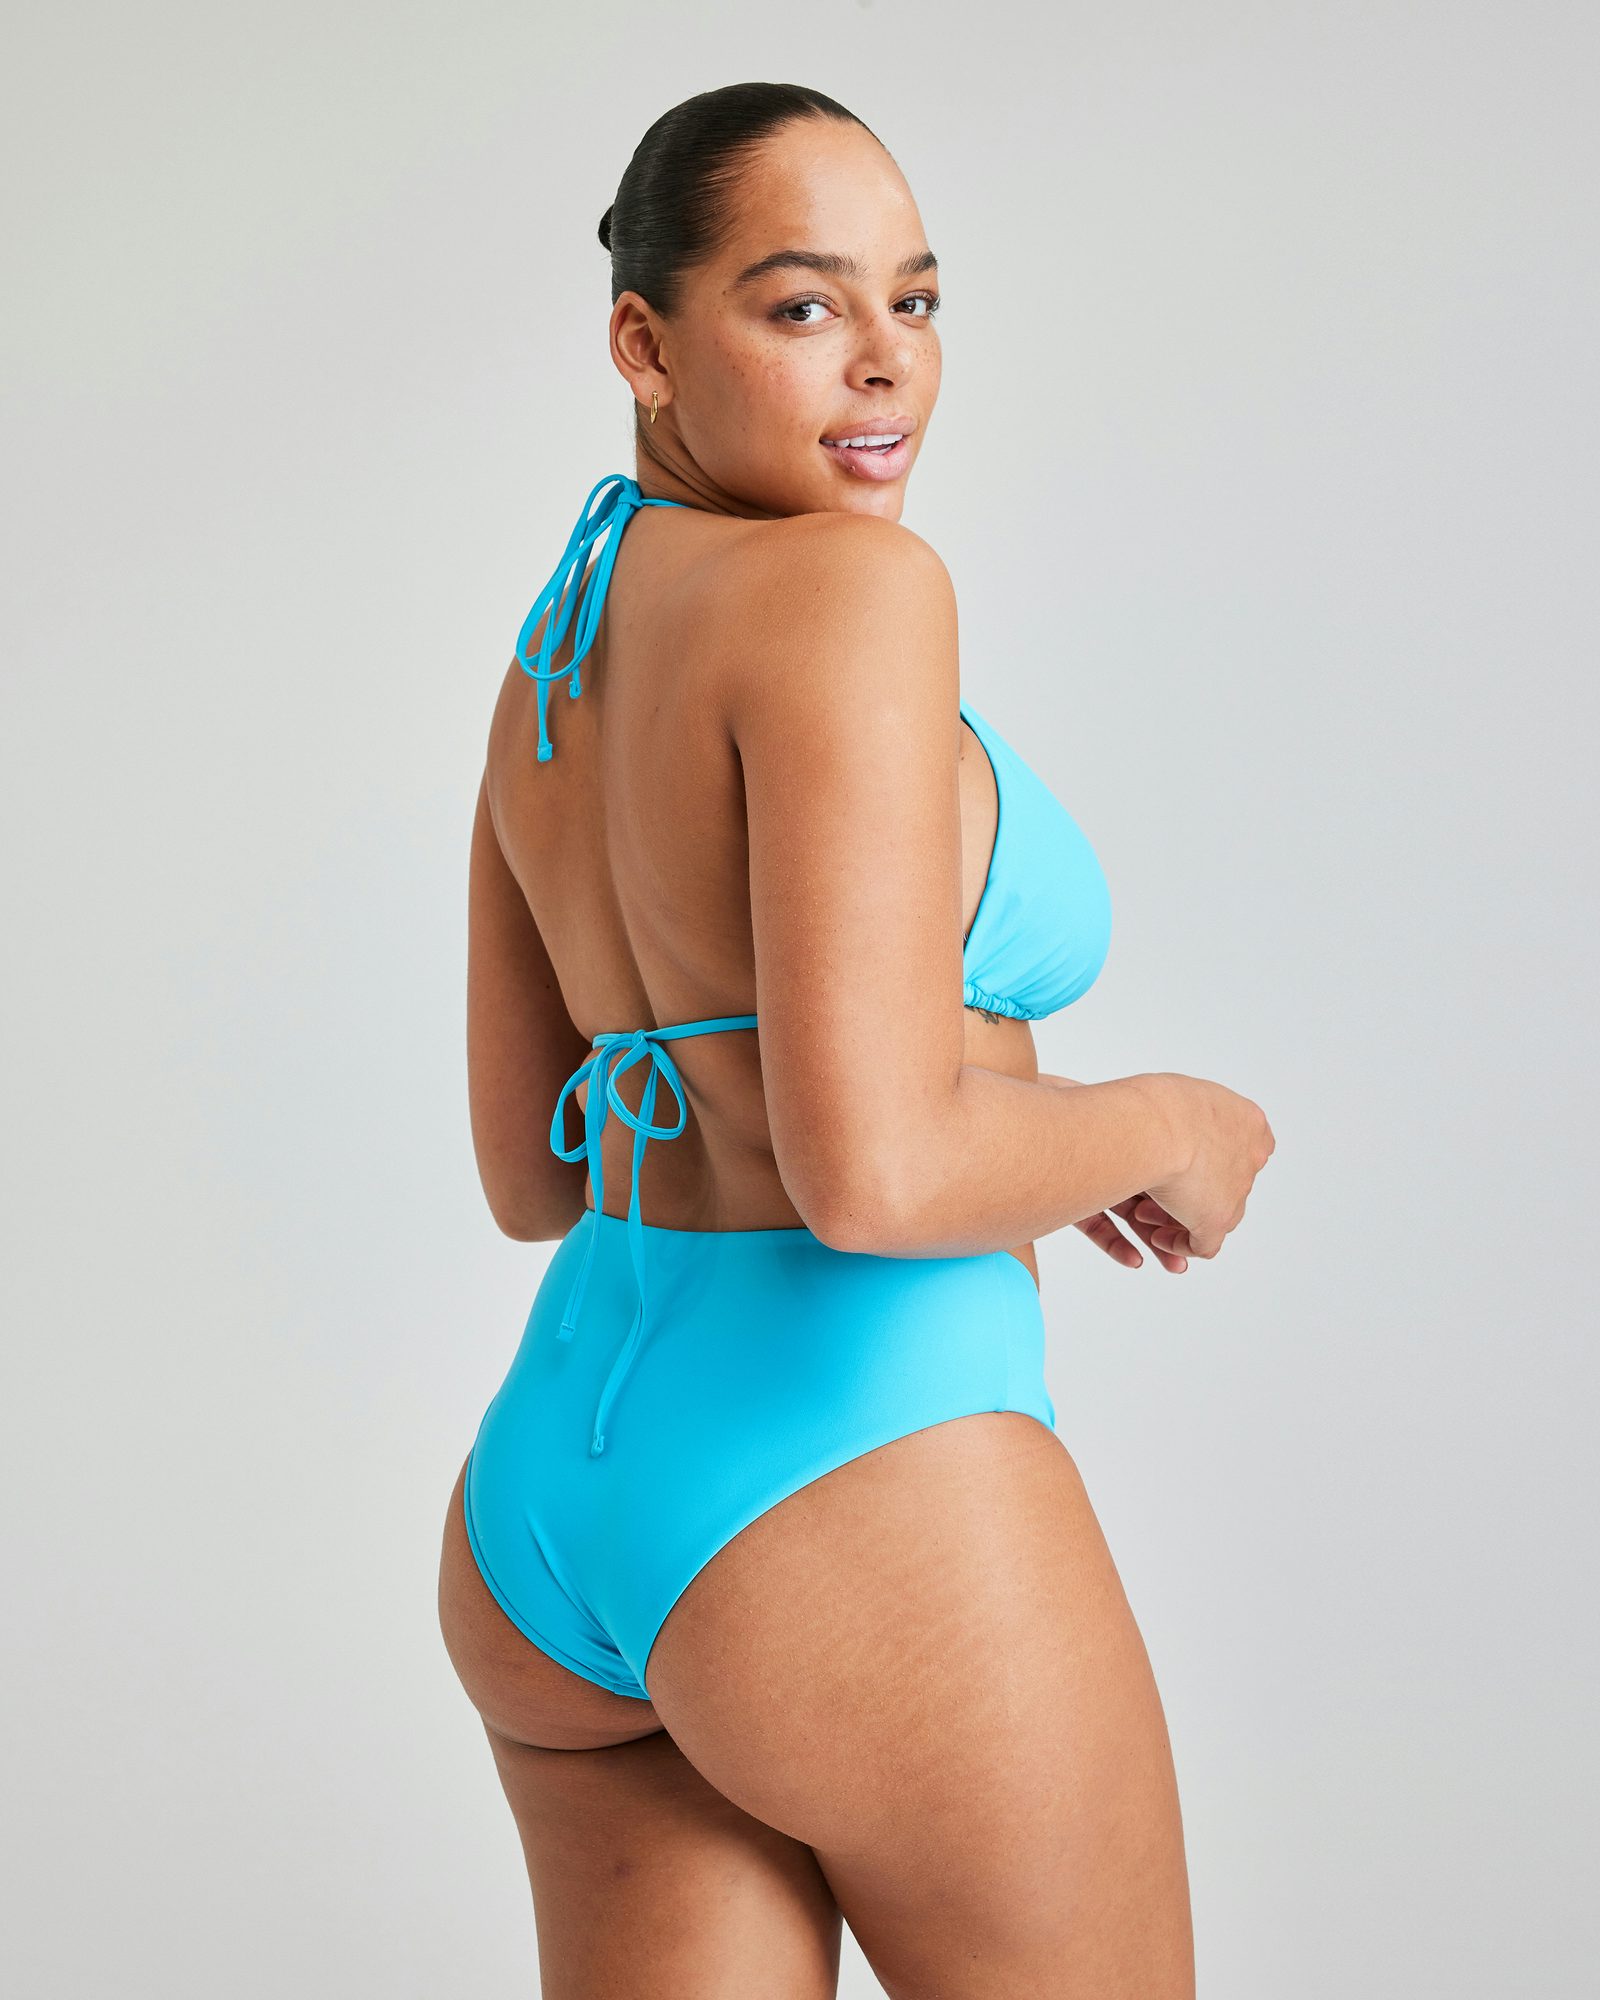 Bora Bora One Shoulder One Size Bikini TOP ONLY (Royal Blue